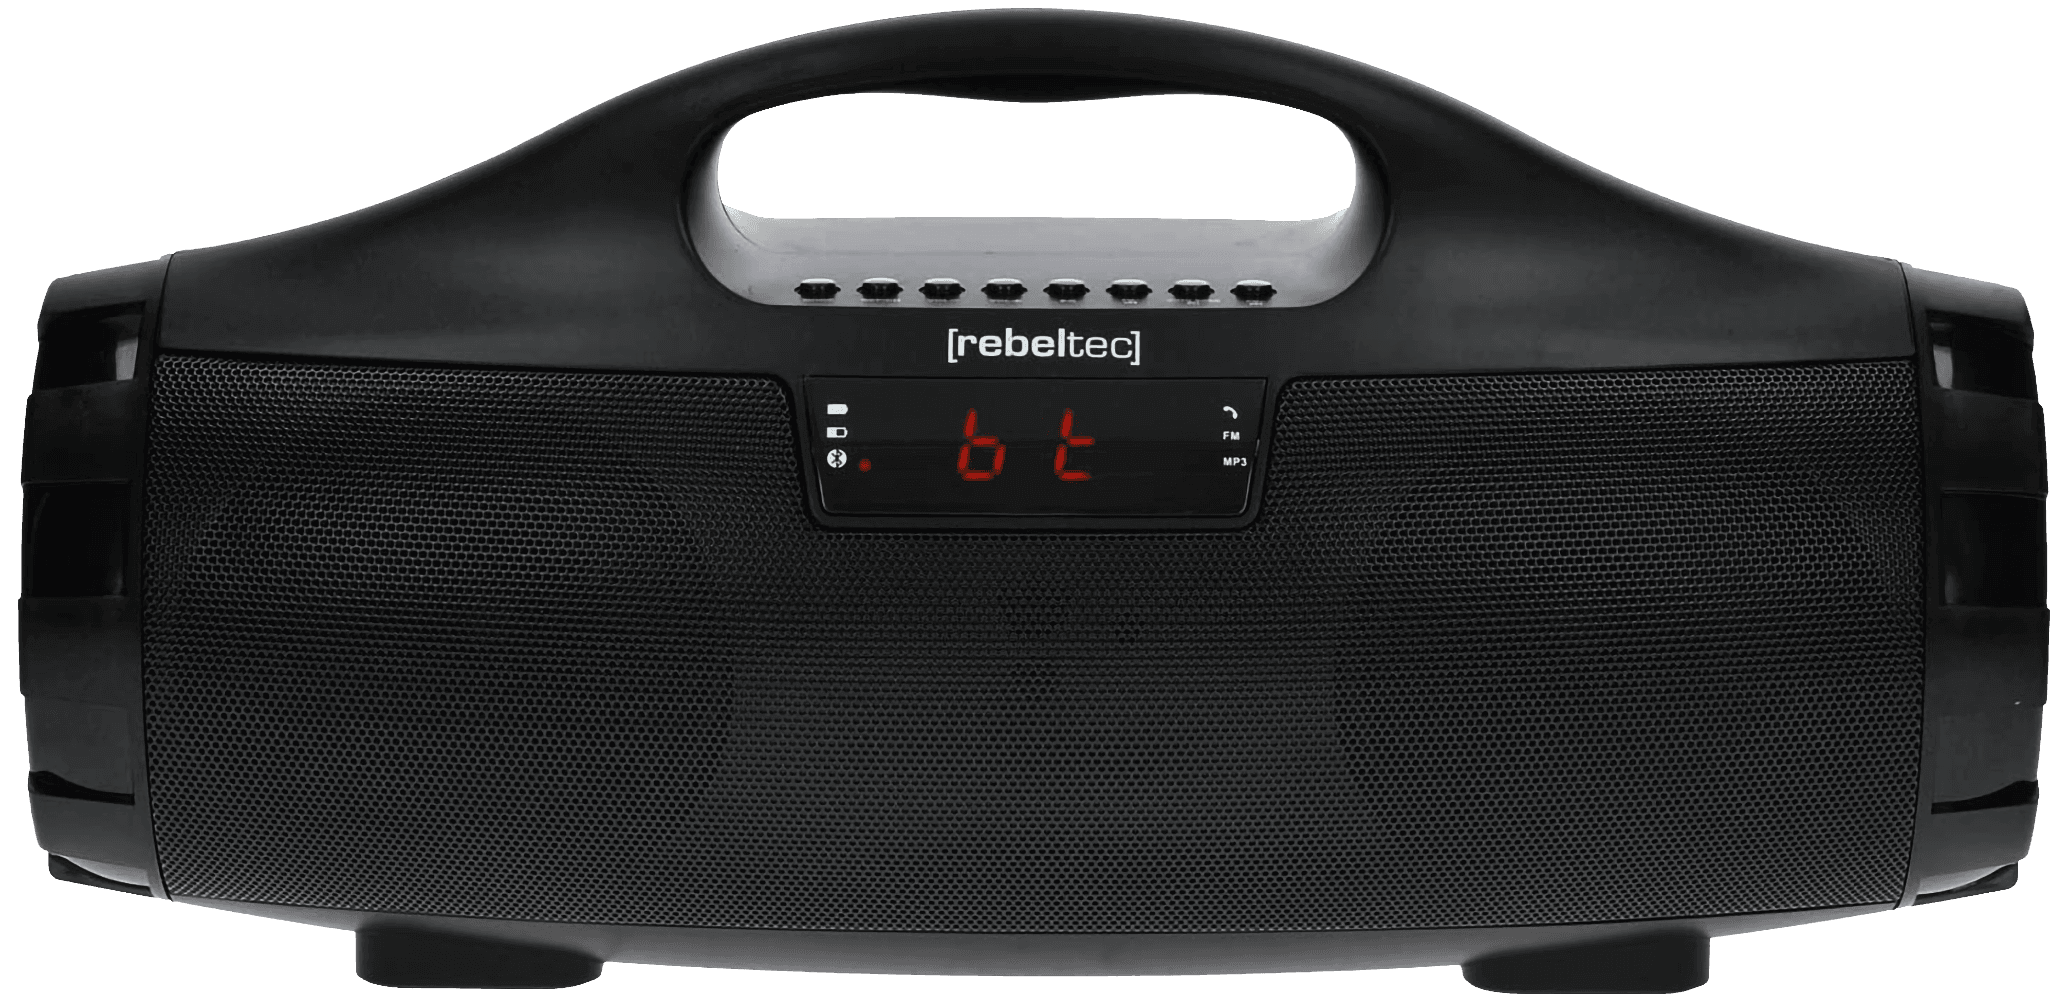 Samsung Galaxy A6 2018 (A600) kompatibilis bluetooth hangszóró Rebeltec Soundbox 390 fekete